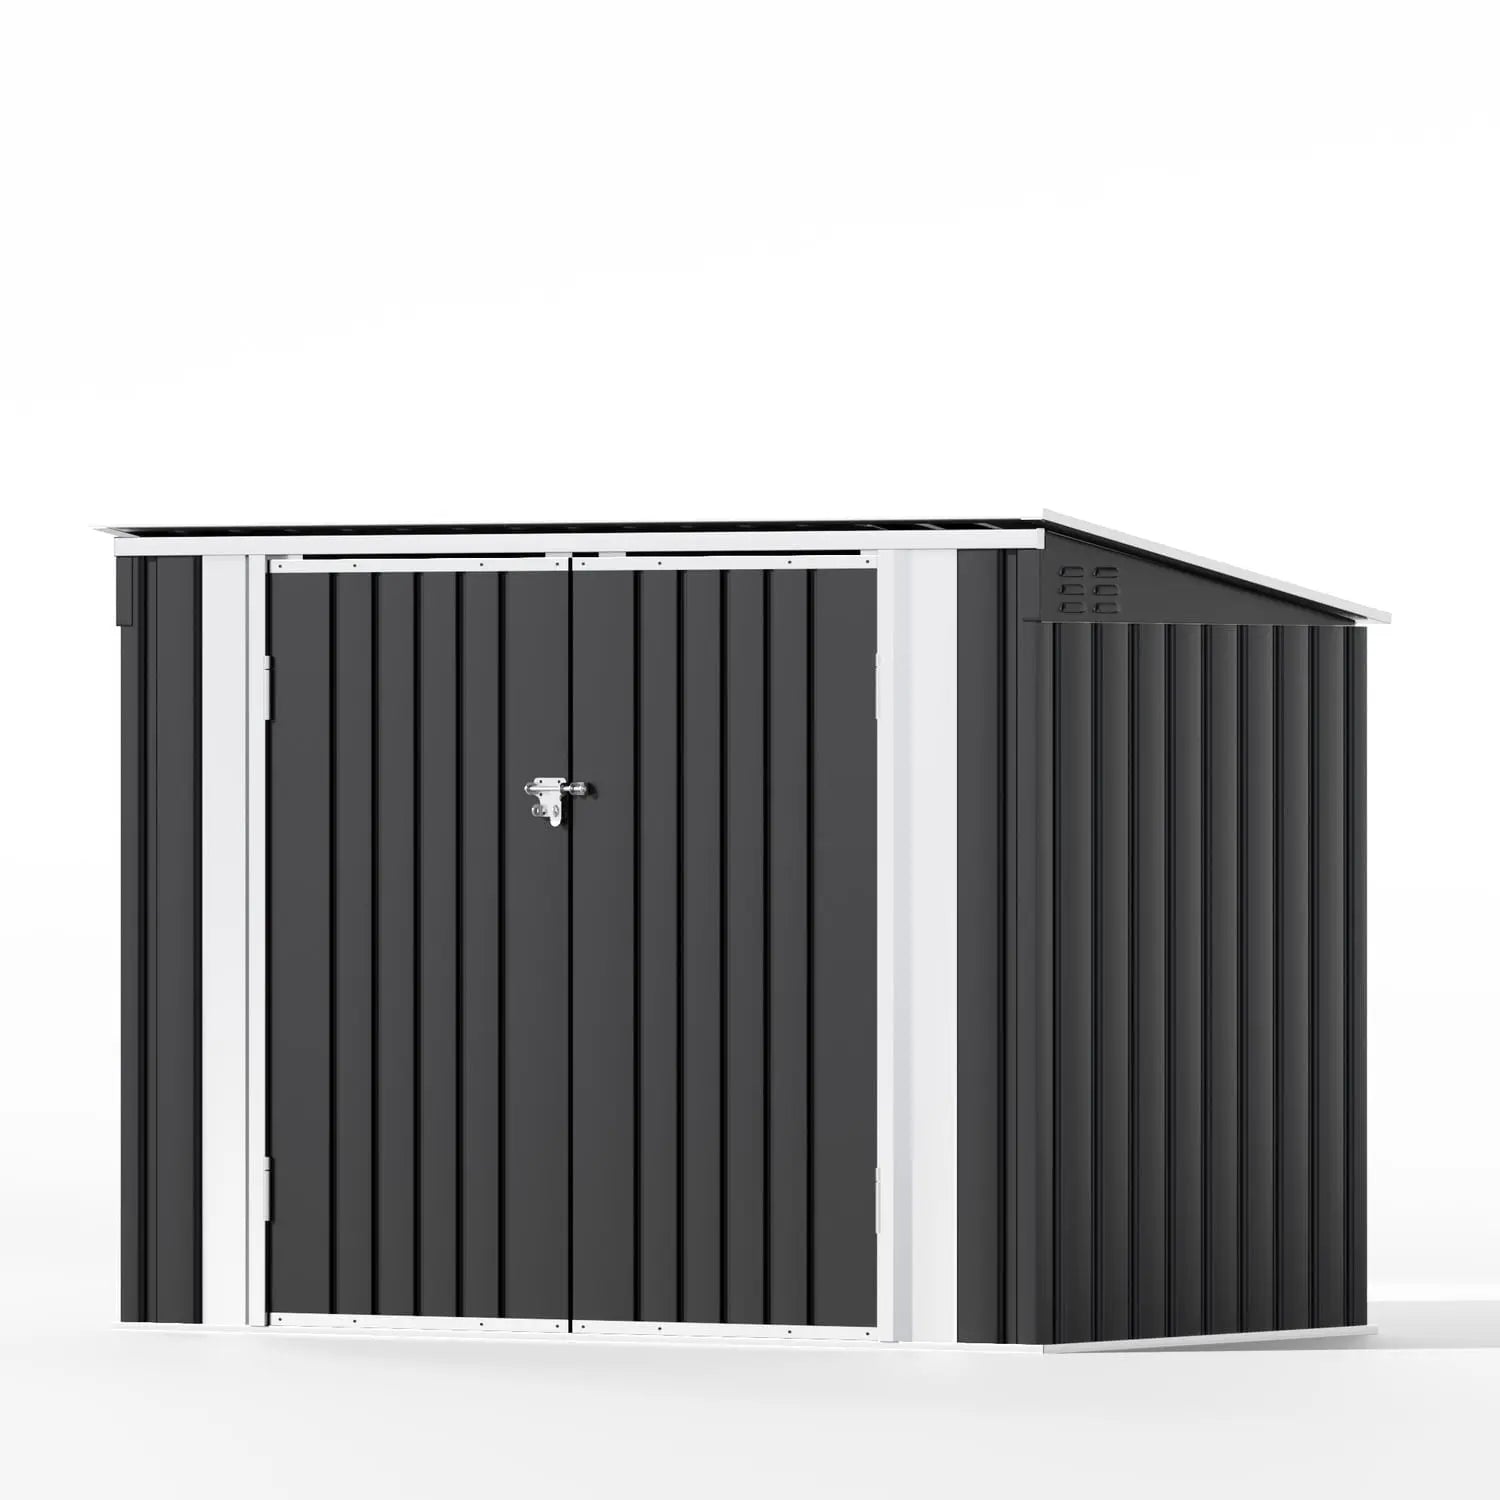 6x3 metal bike storage shed